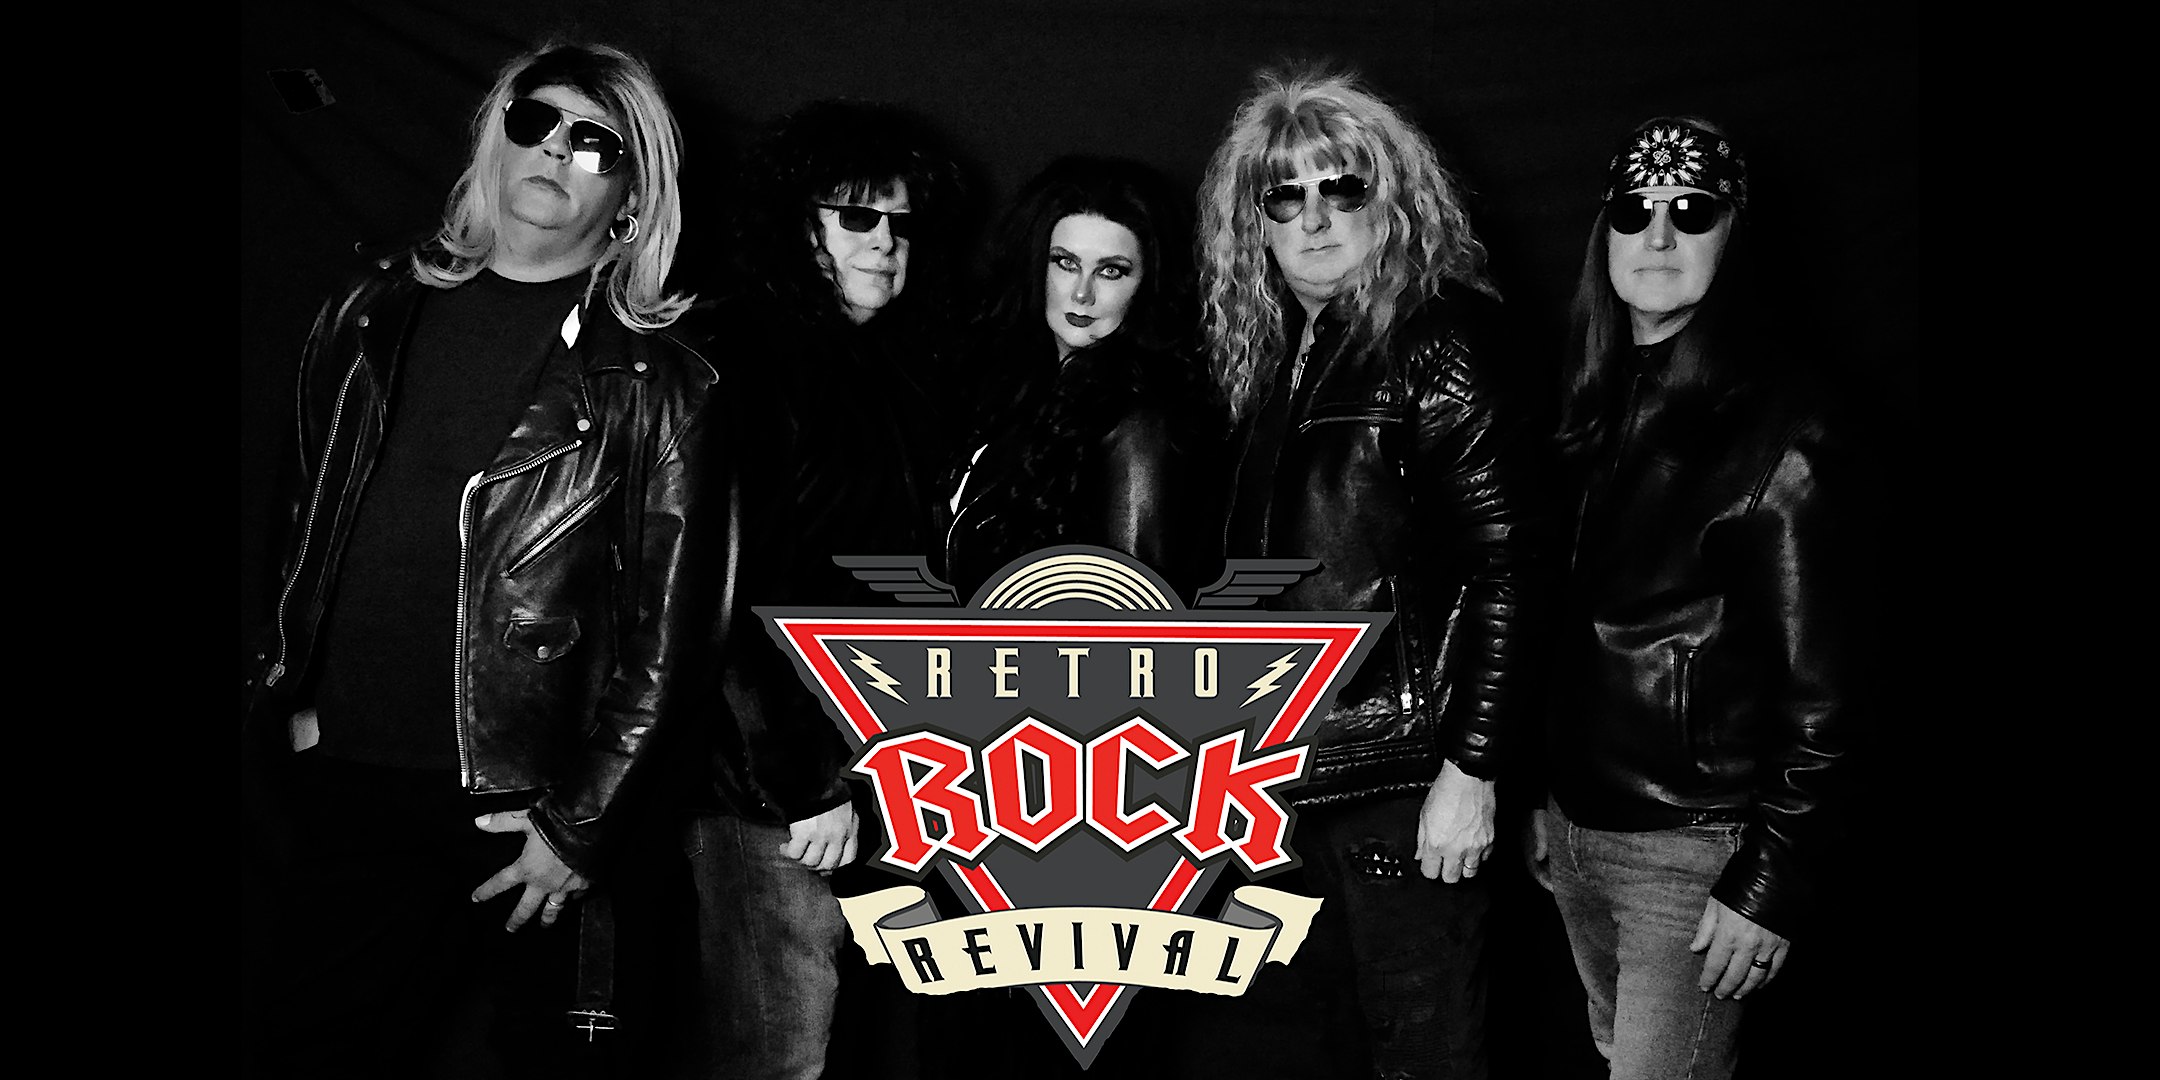 Retro Rock Revival – A Tribute to 80’s Arena Rock